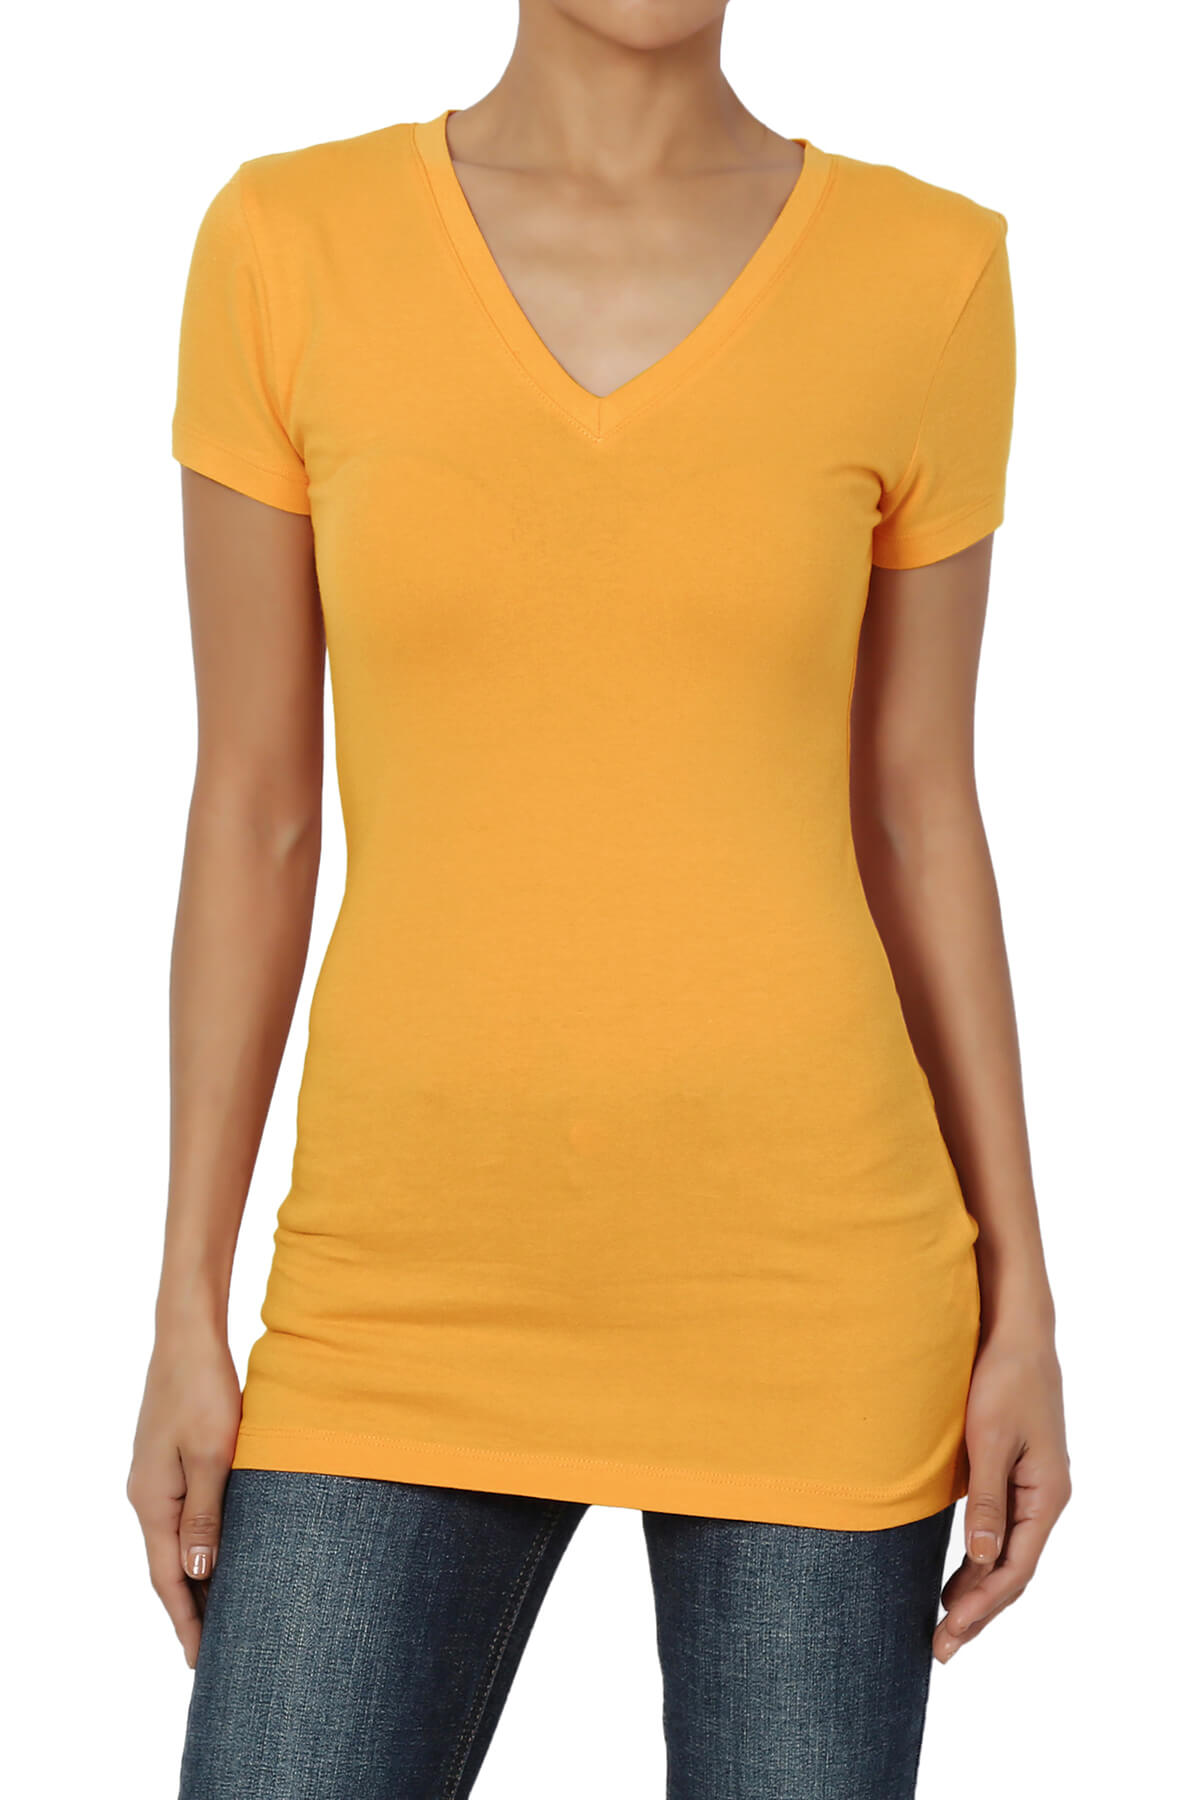 TheMogan Women's S~XL Basic V Neck Short Sleeve T-Shirts Plain Stretch  Cotton Spandex Tee